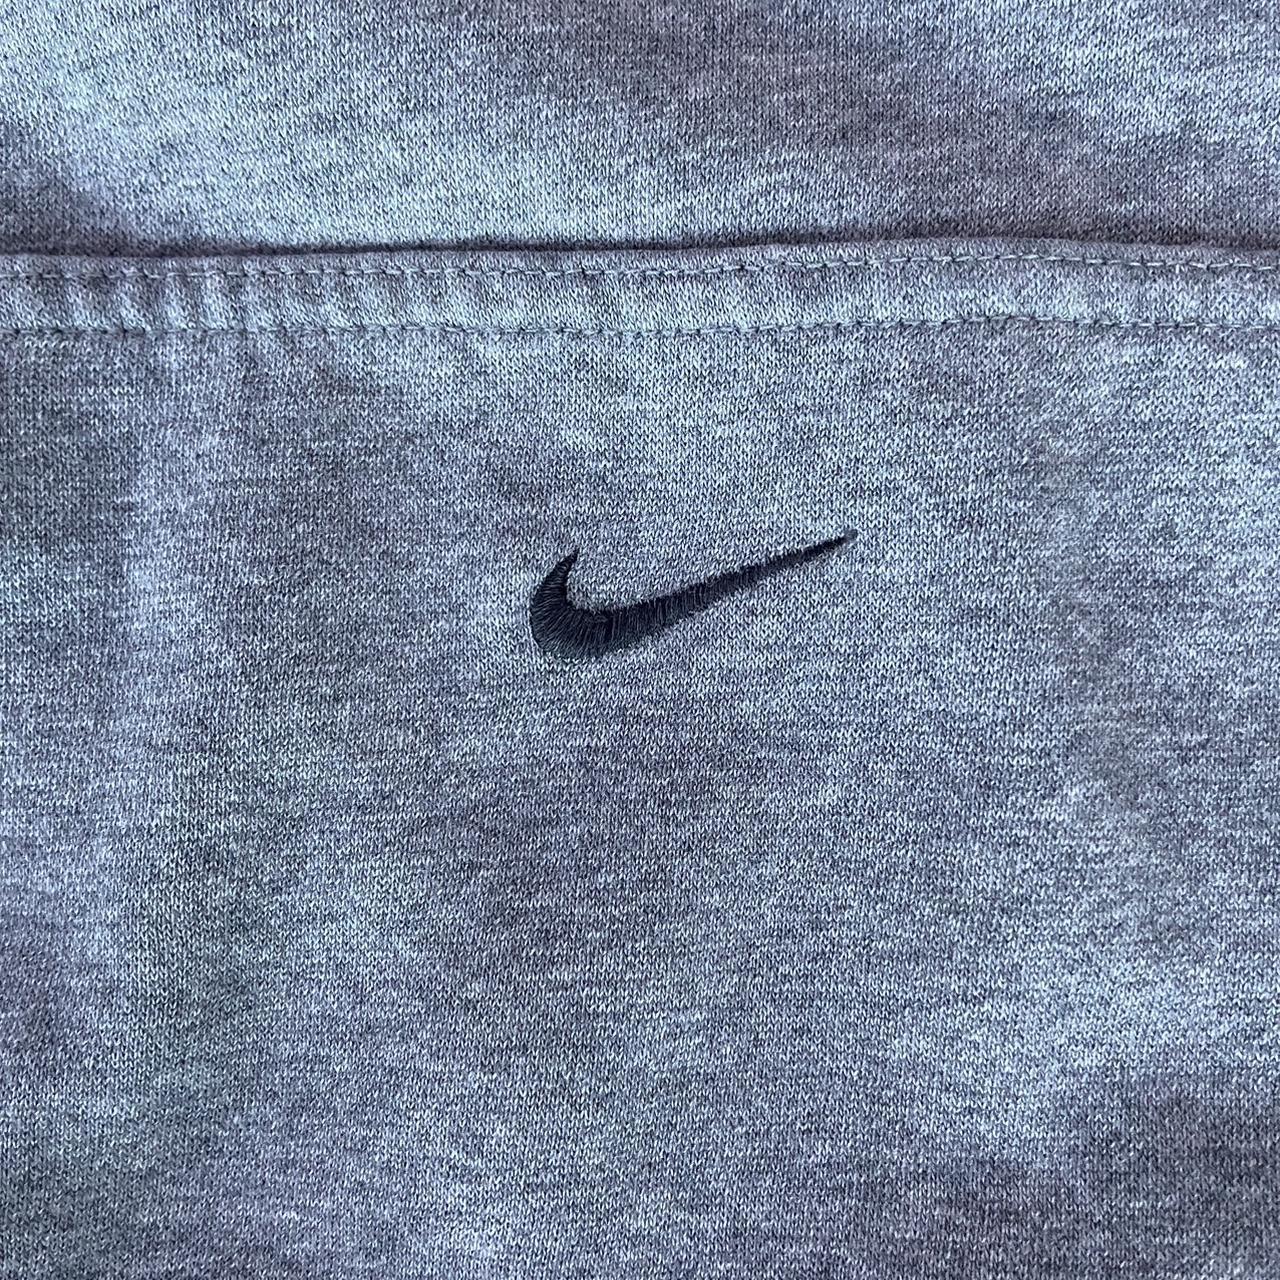 Nike Center Swoosh Few barely noticeable... - Depop